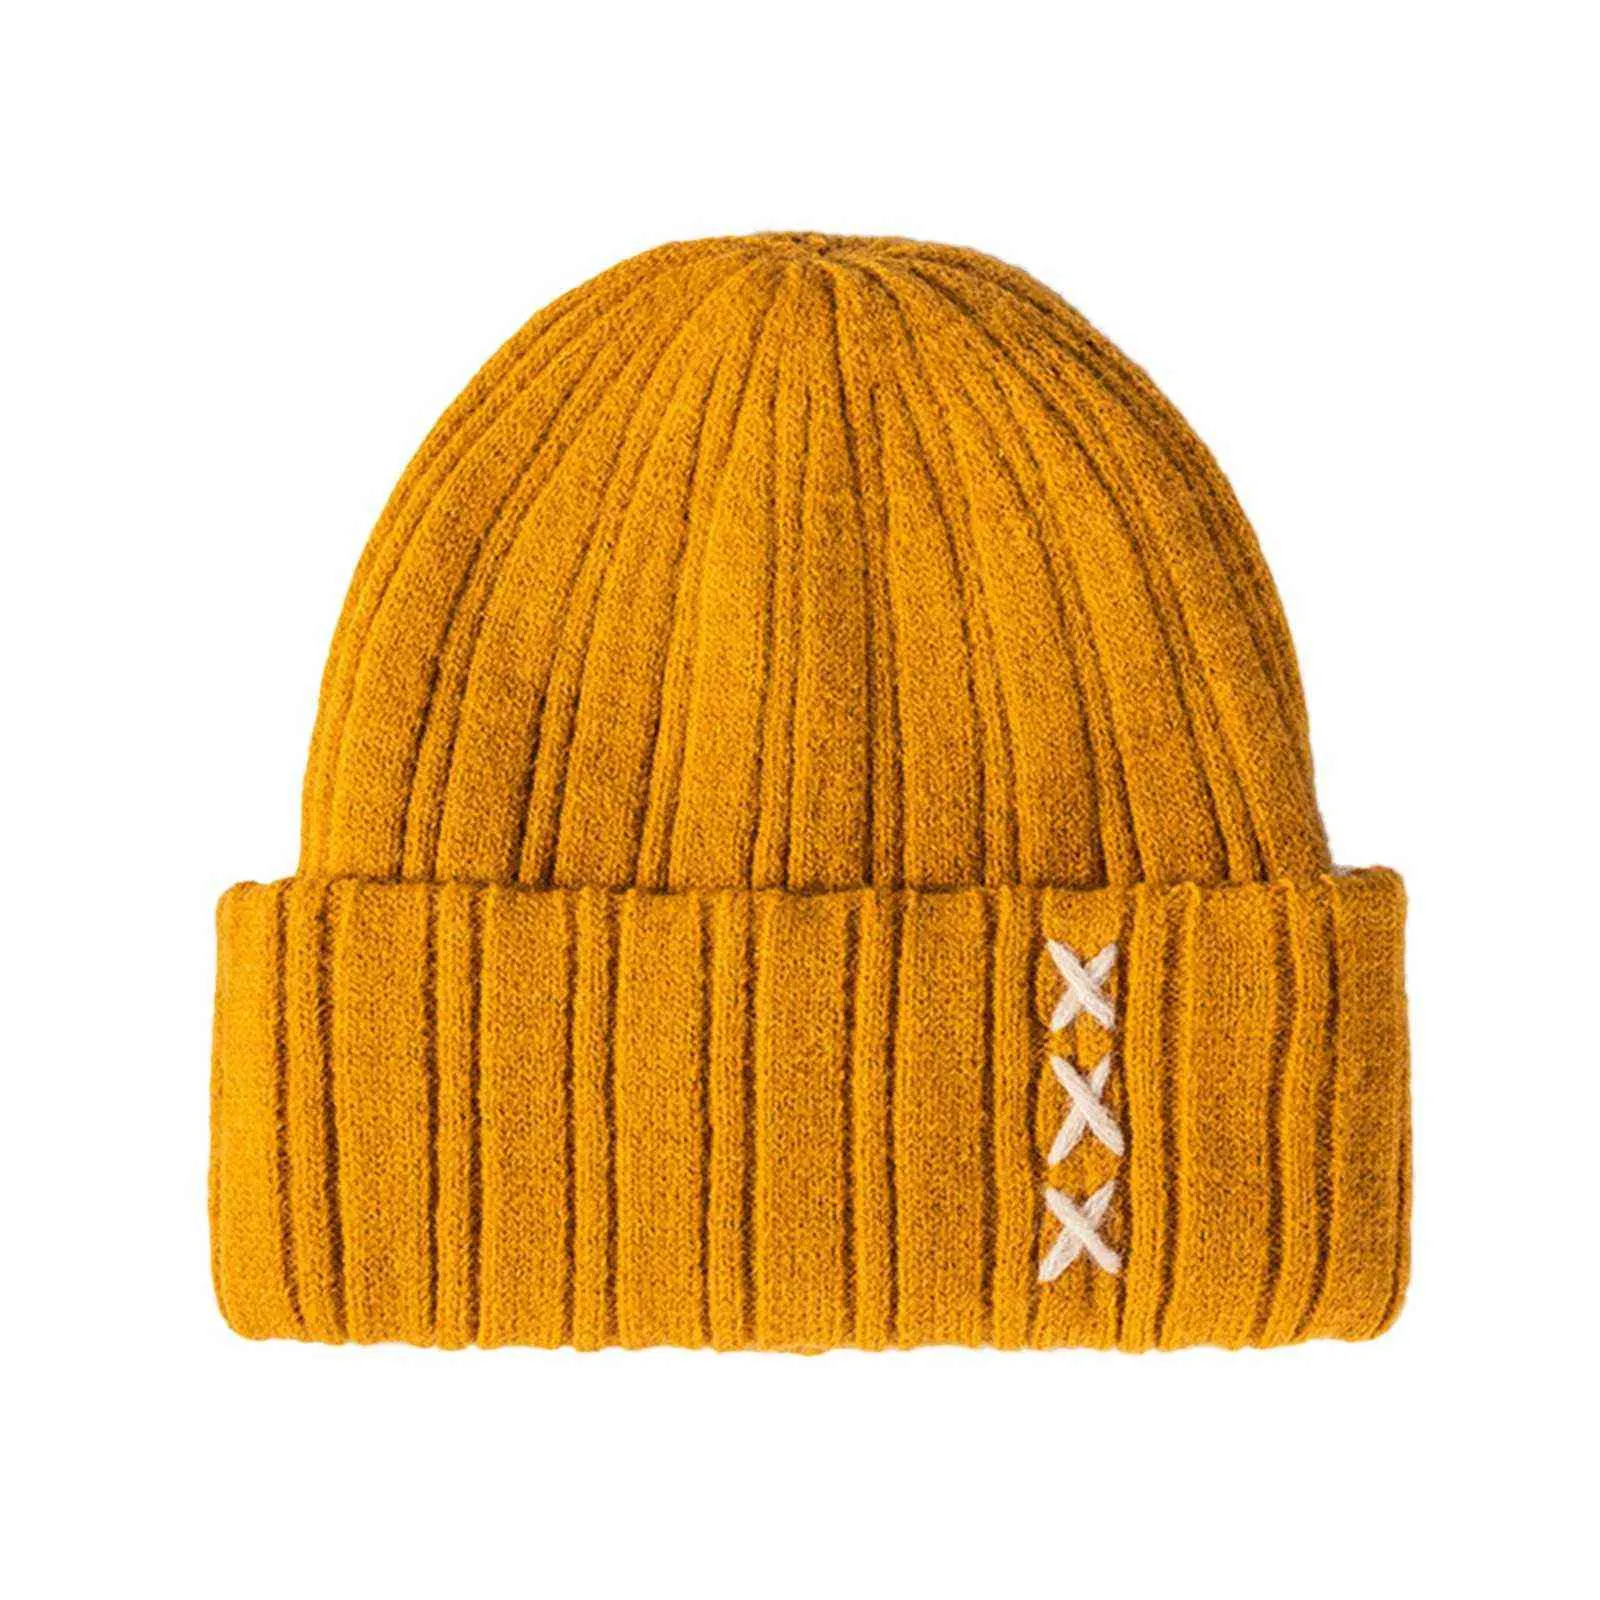 Unisex Fashion Casual Wollen Hoed Winter Thicken Warm Outdoor Gebreide Herfst Vrouwelijke Beanie Caps Warmer Bonnet Dames Casual Cap Y21111